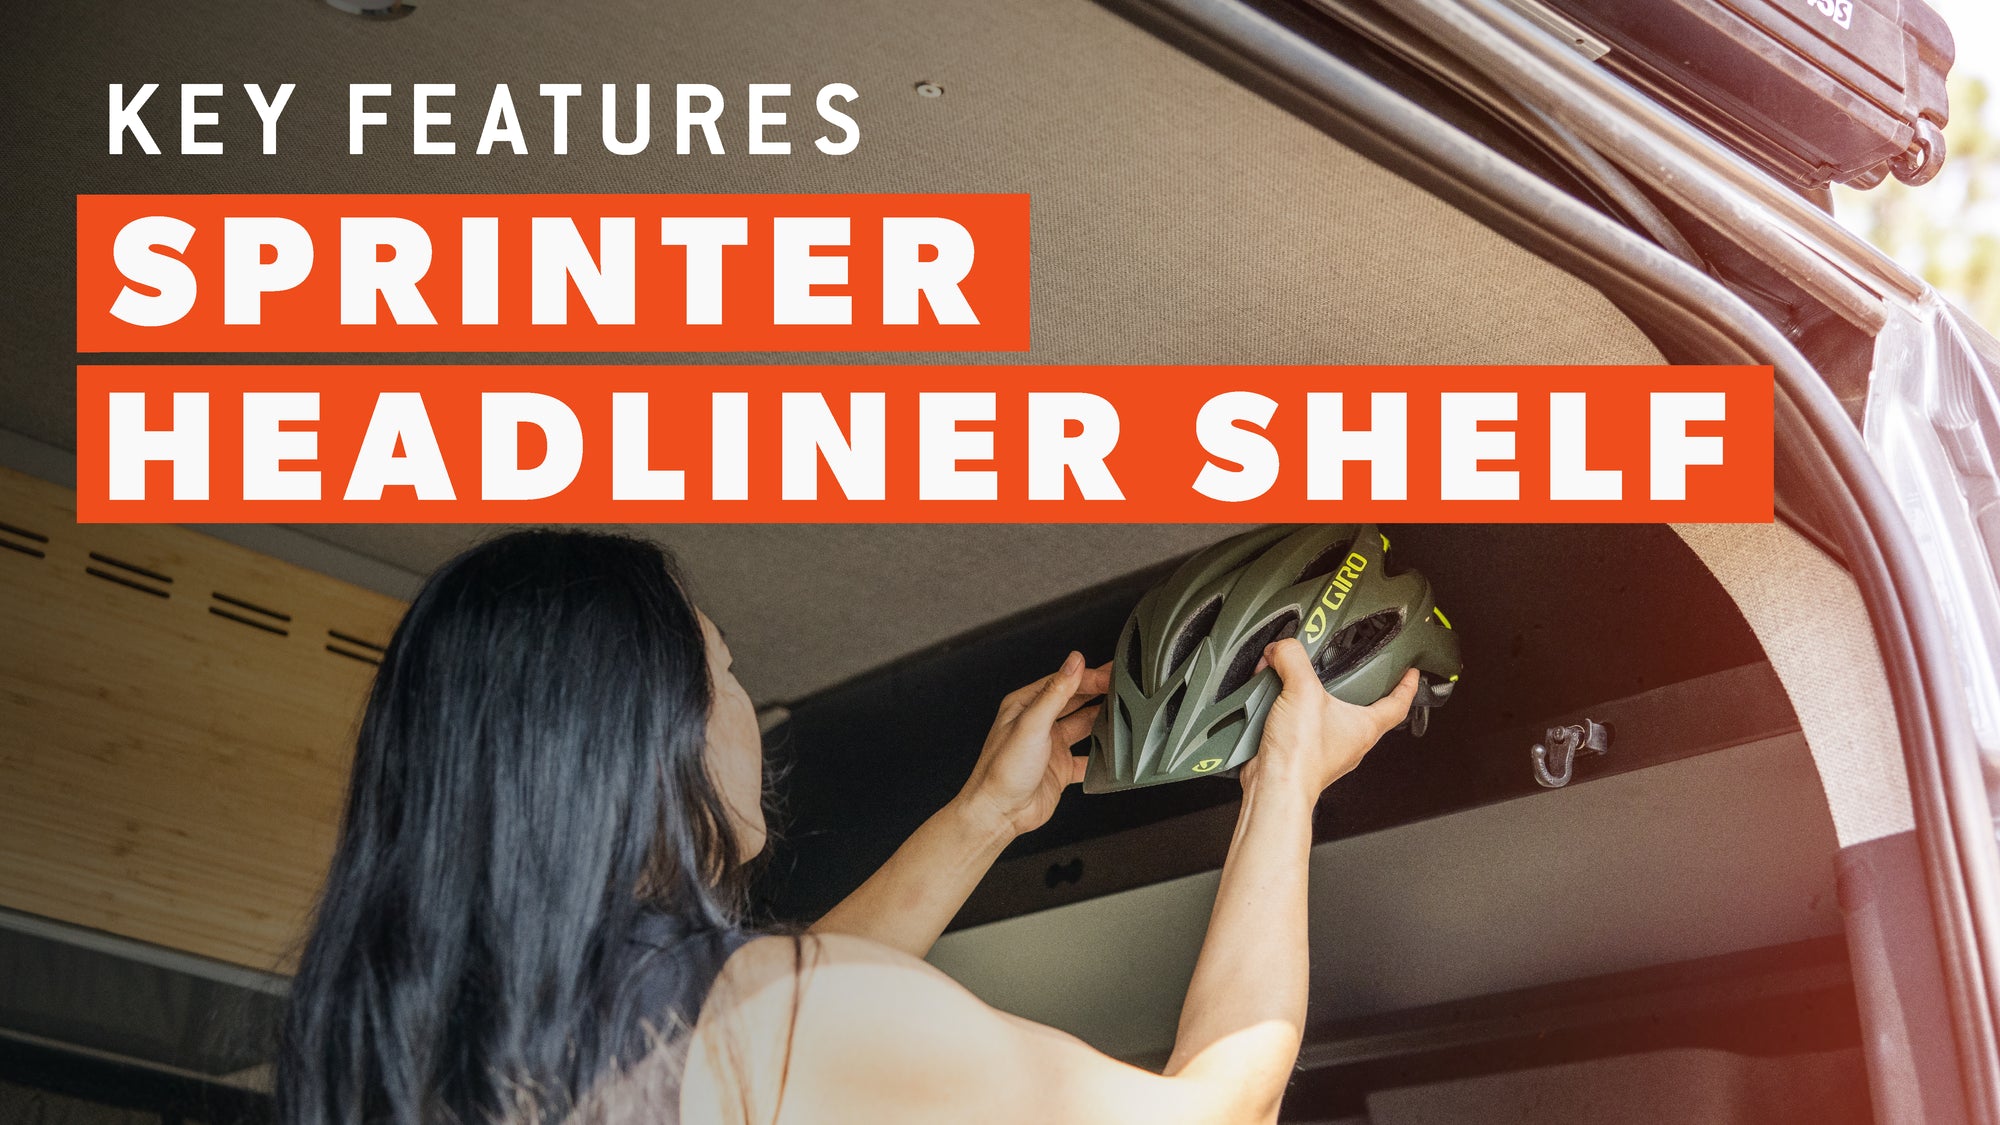 Sprinter Headliner Shelf Key Features Video